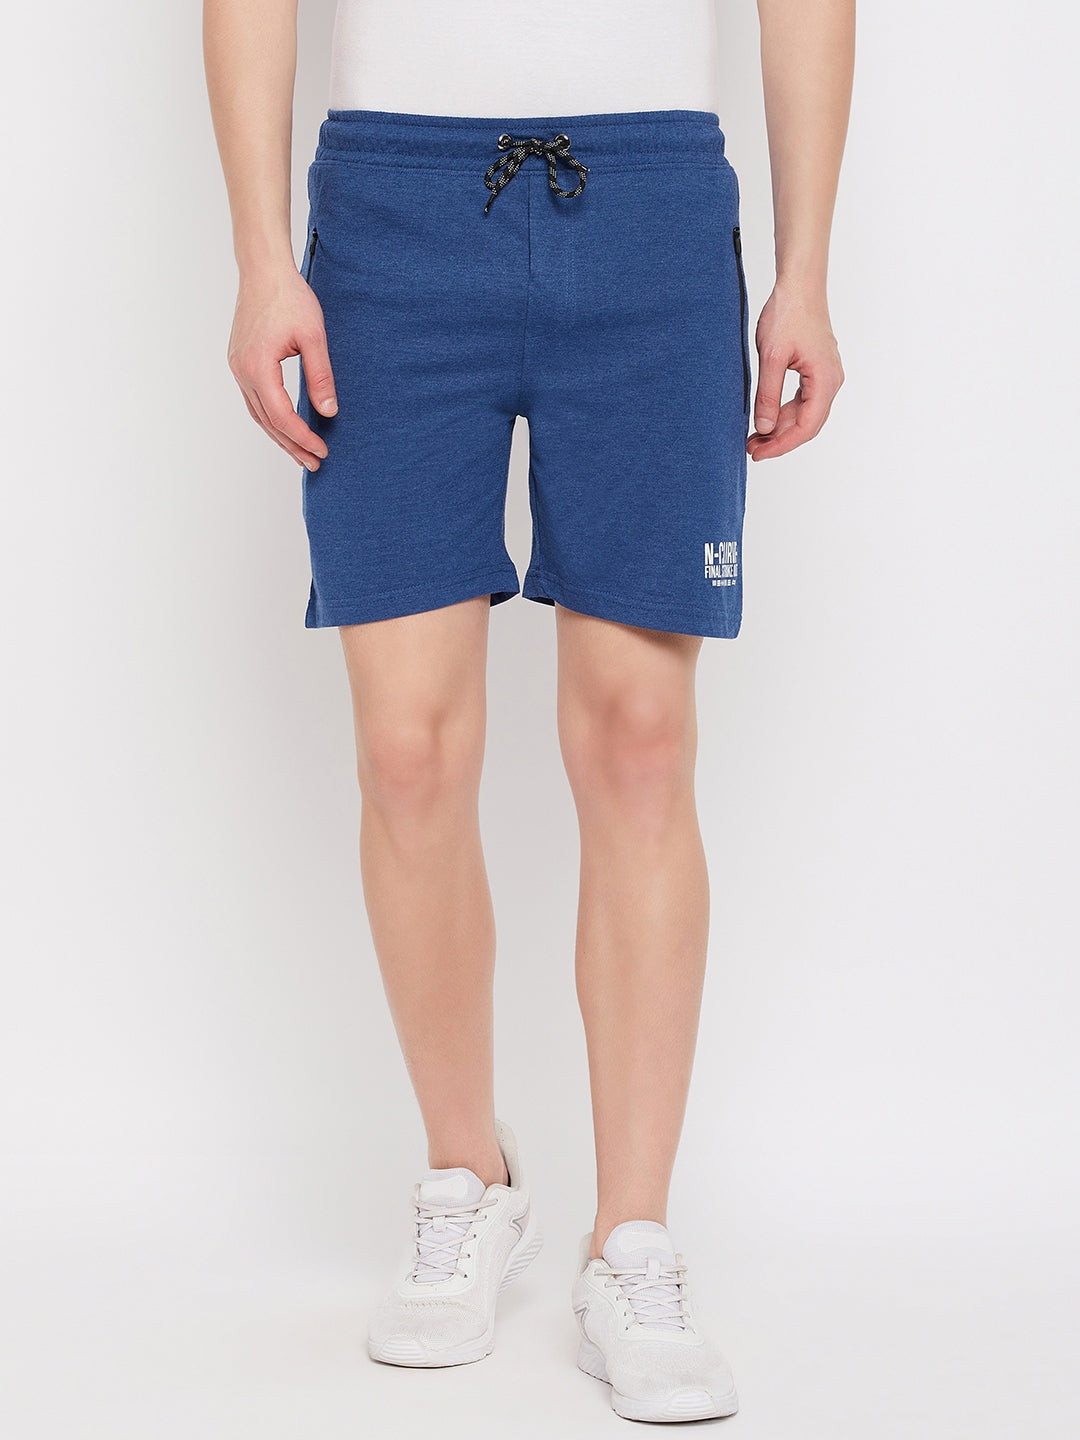 Livfree Men's Bermuda in Solid Pattern Both Side Zipper Pockets - Denim Milange